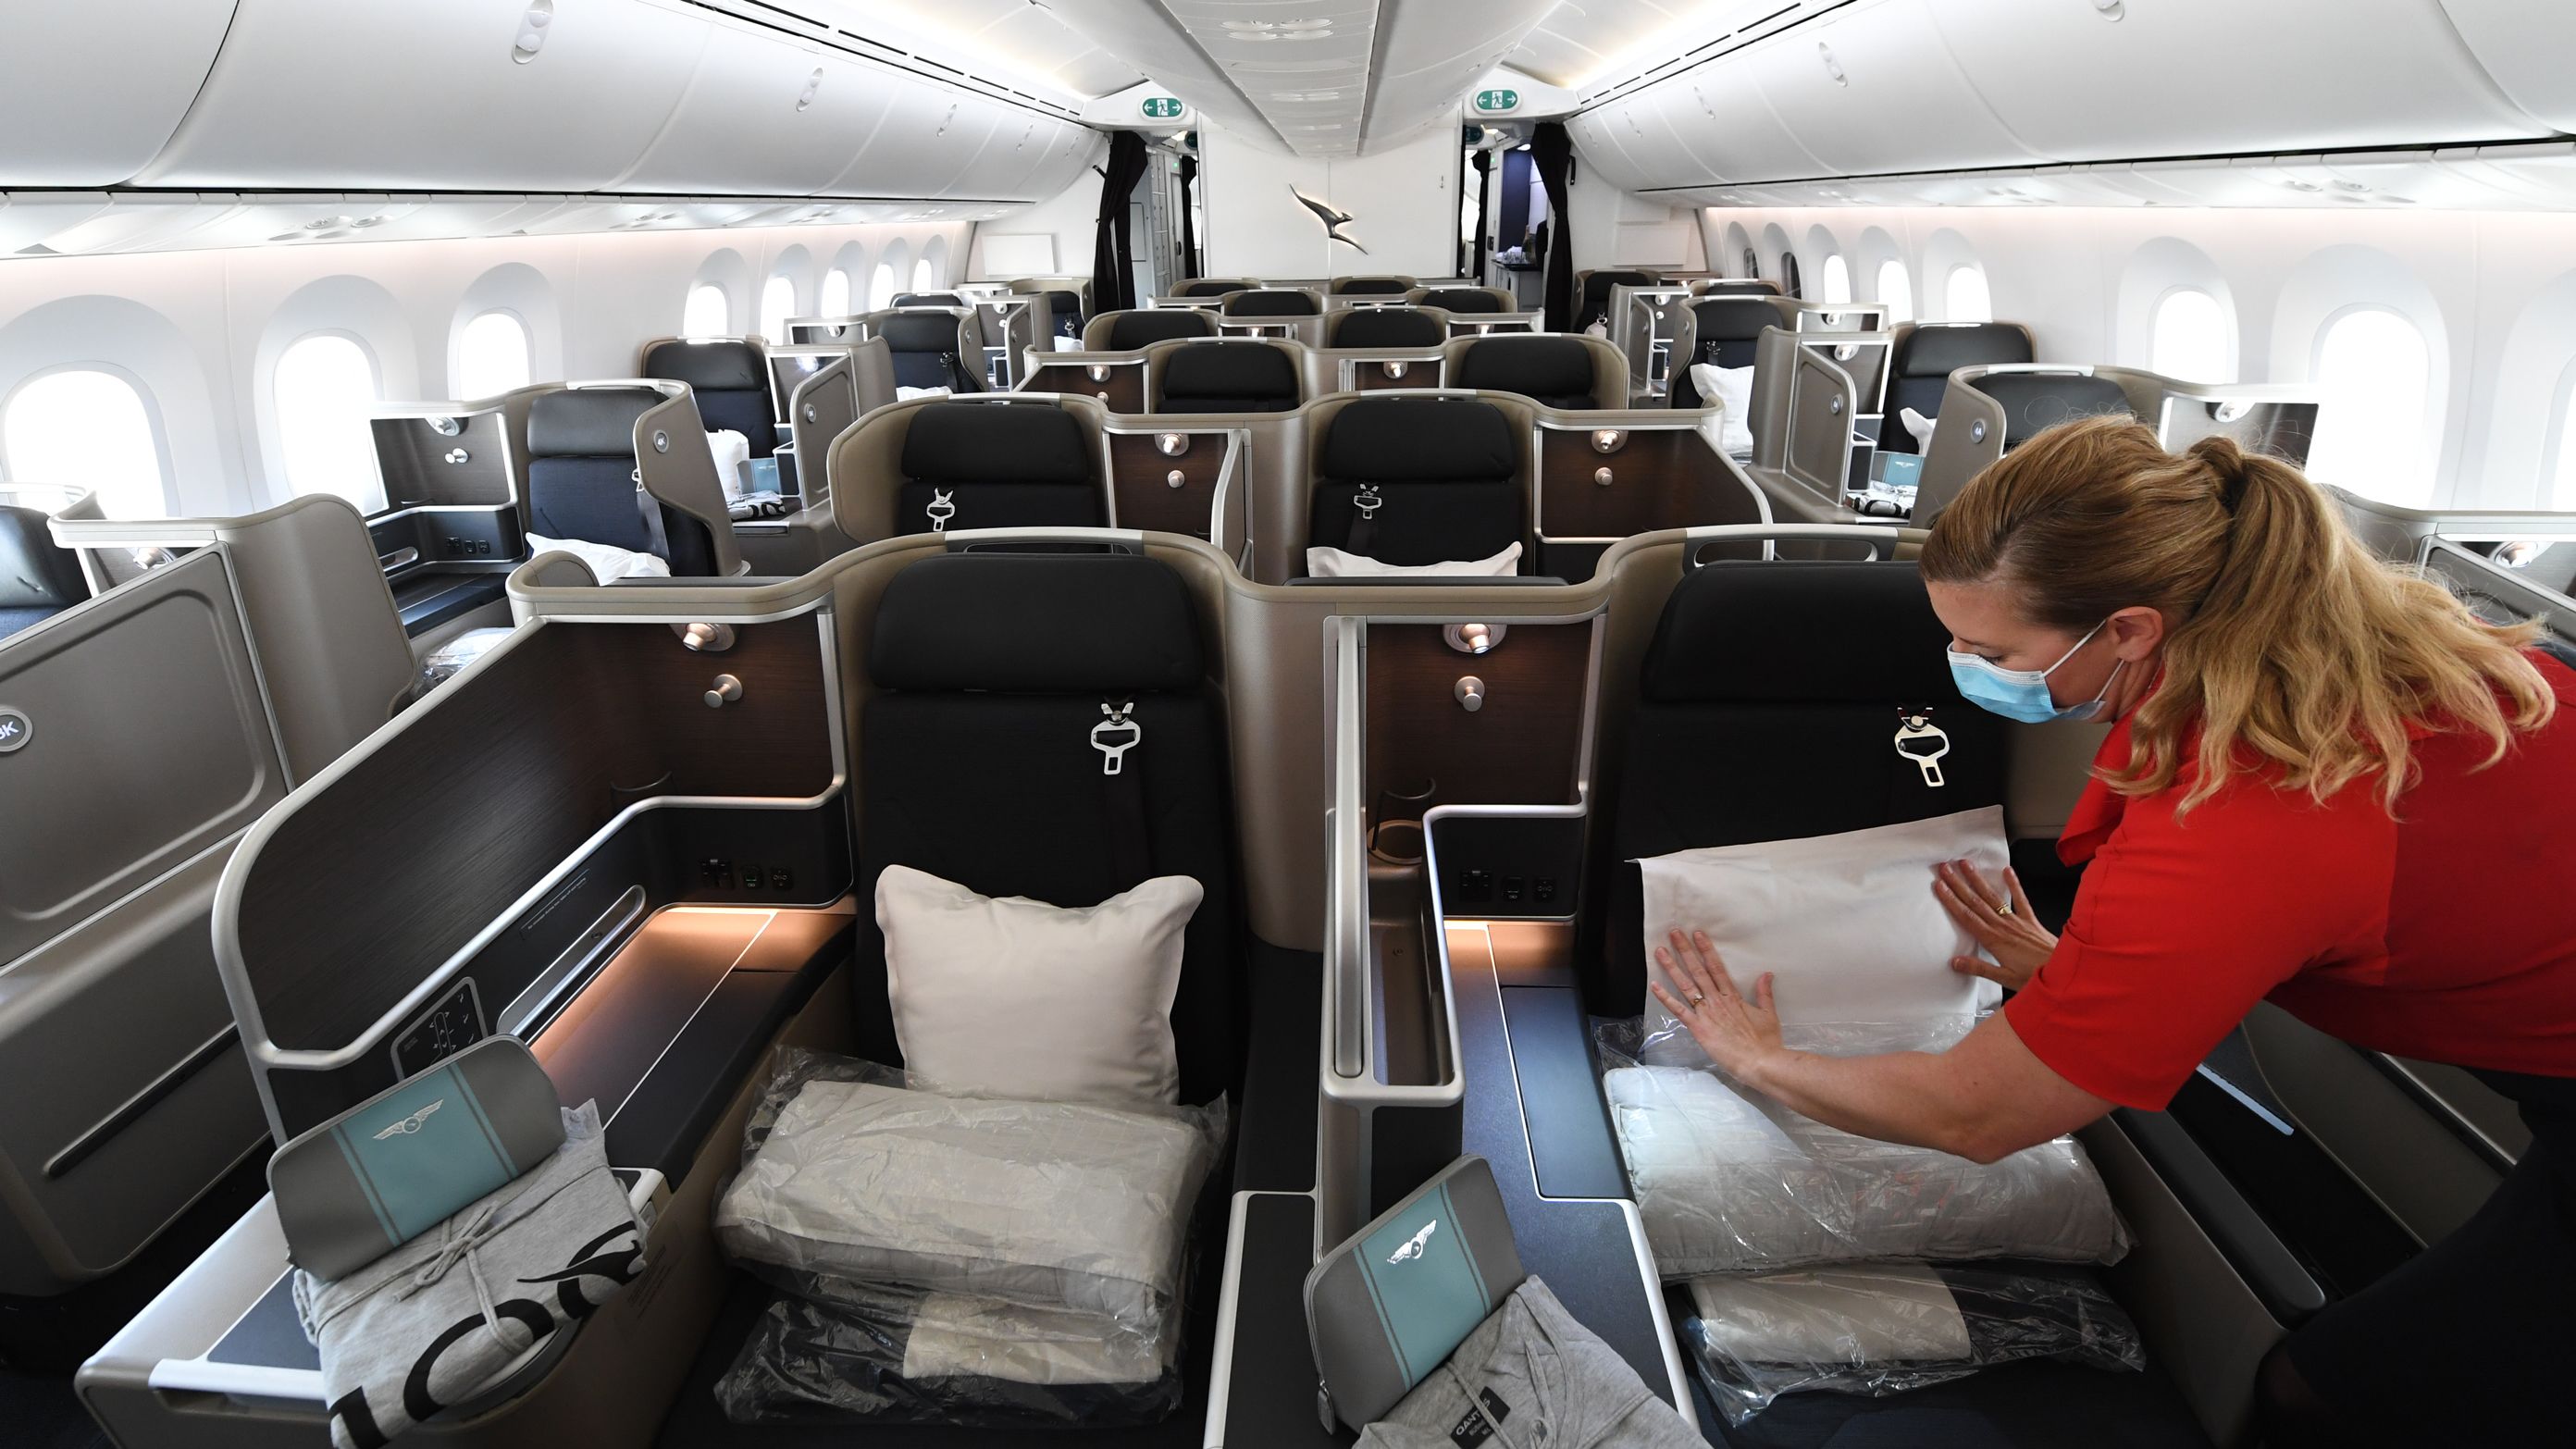 https://media.cnn.com/api/v1/images/stellar/prod/211209180623-04-widest-airplane-passengers-seats-qantas-787.jpg?q=h_1566,w_2784,x_0,y_0